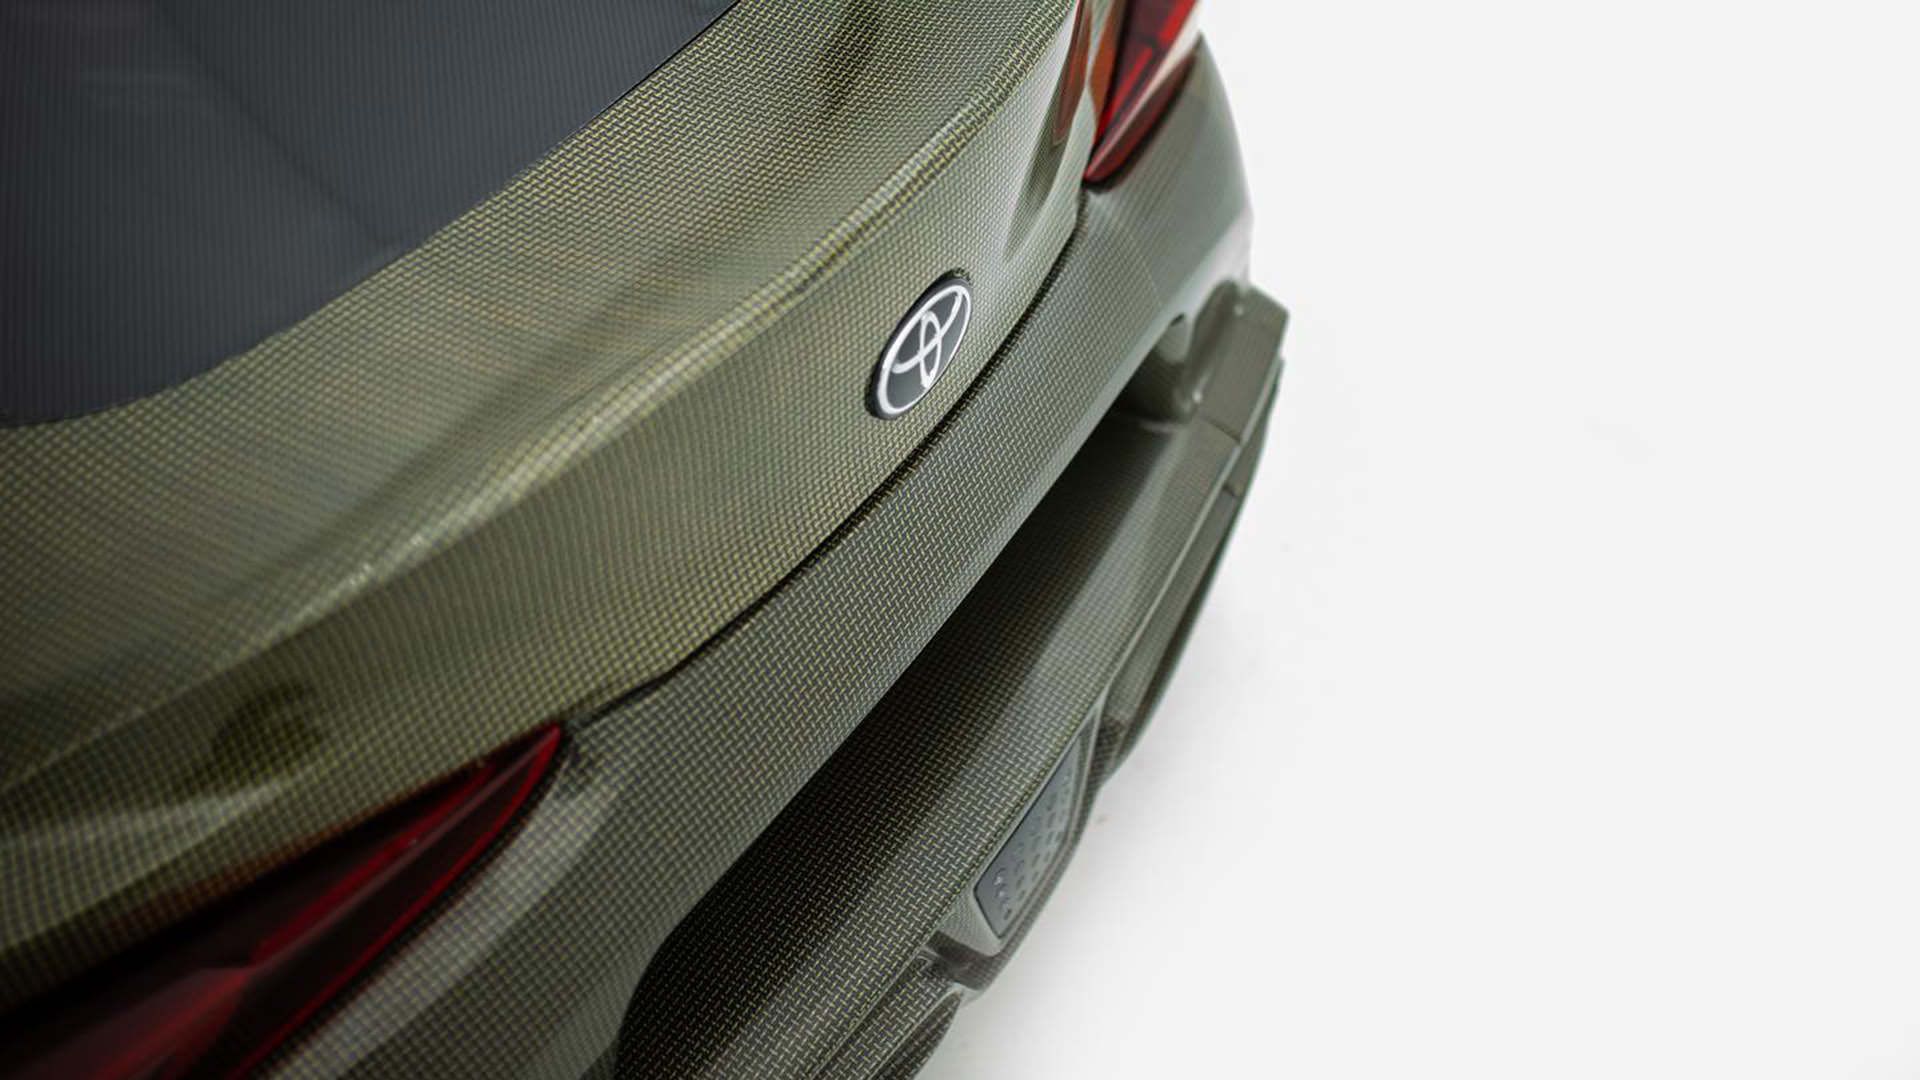 مرجع متخصصين ايران نماي بخش عقب تويوتا سوپرا دريفتر / Toyota Supra Drifter سبز رنگ